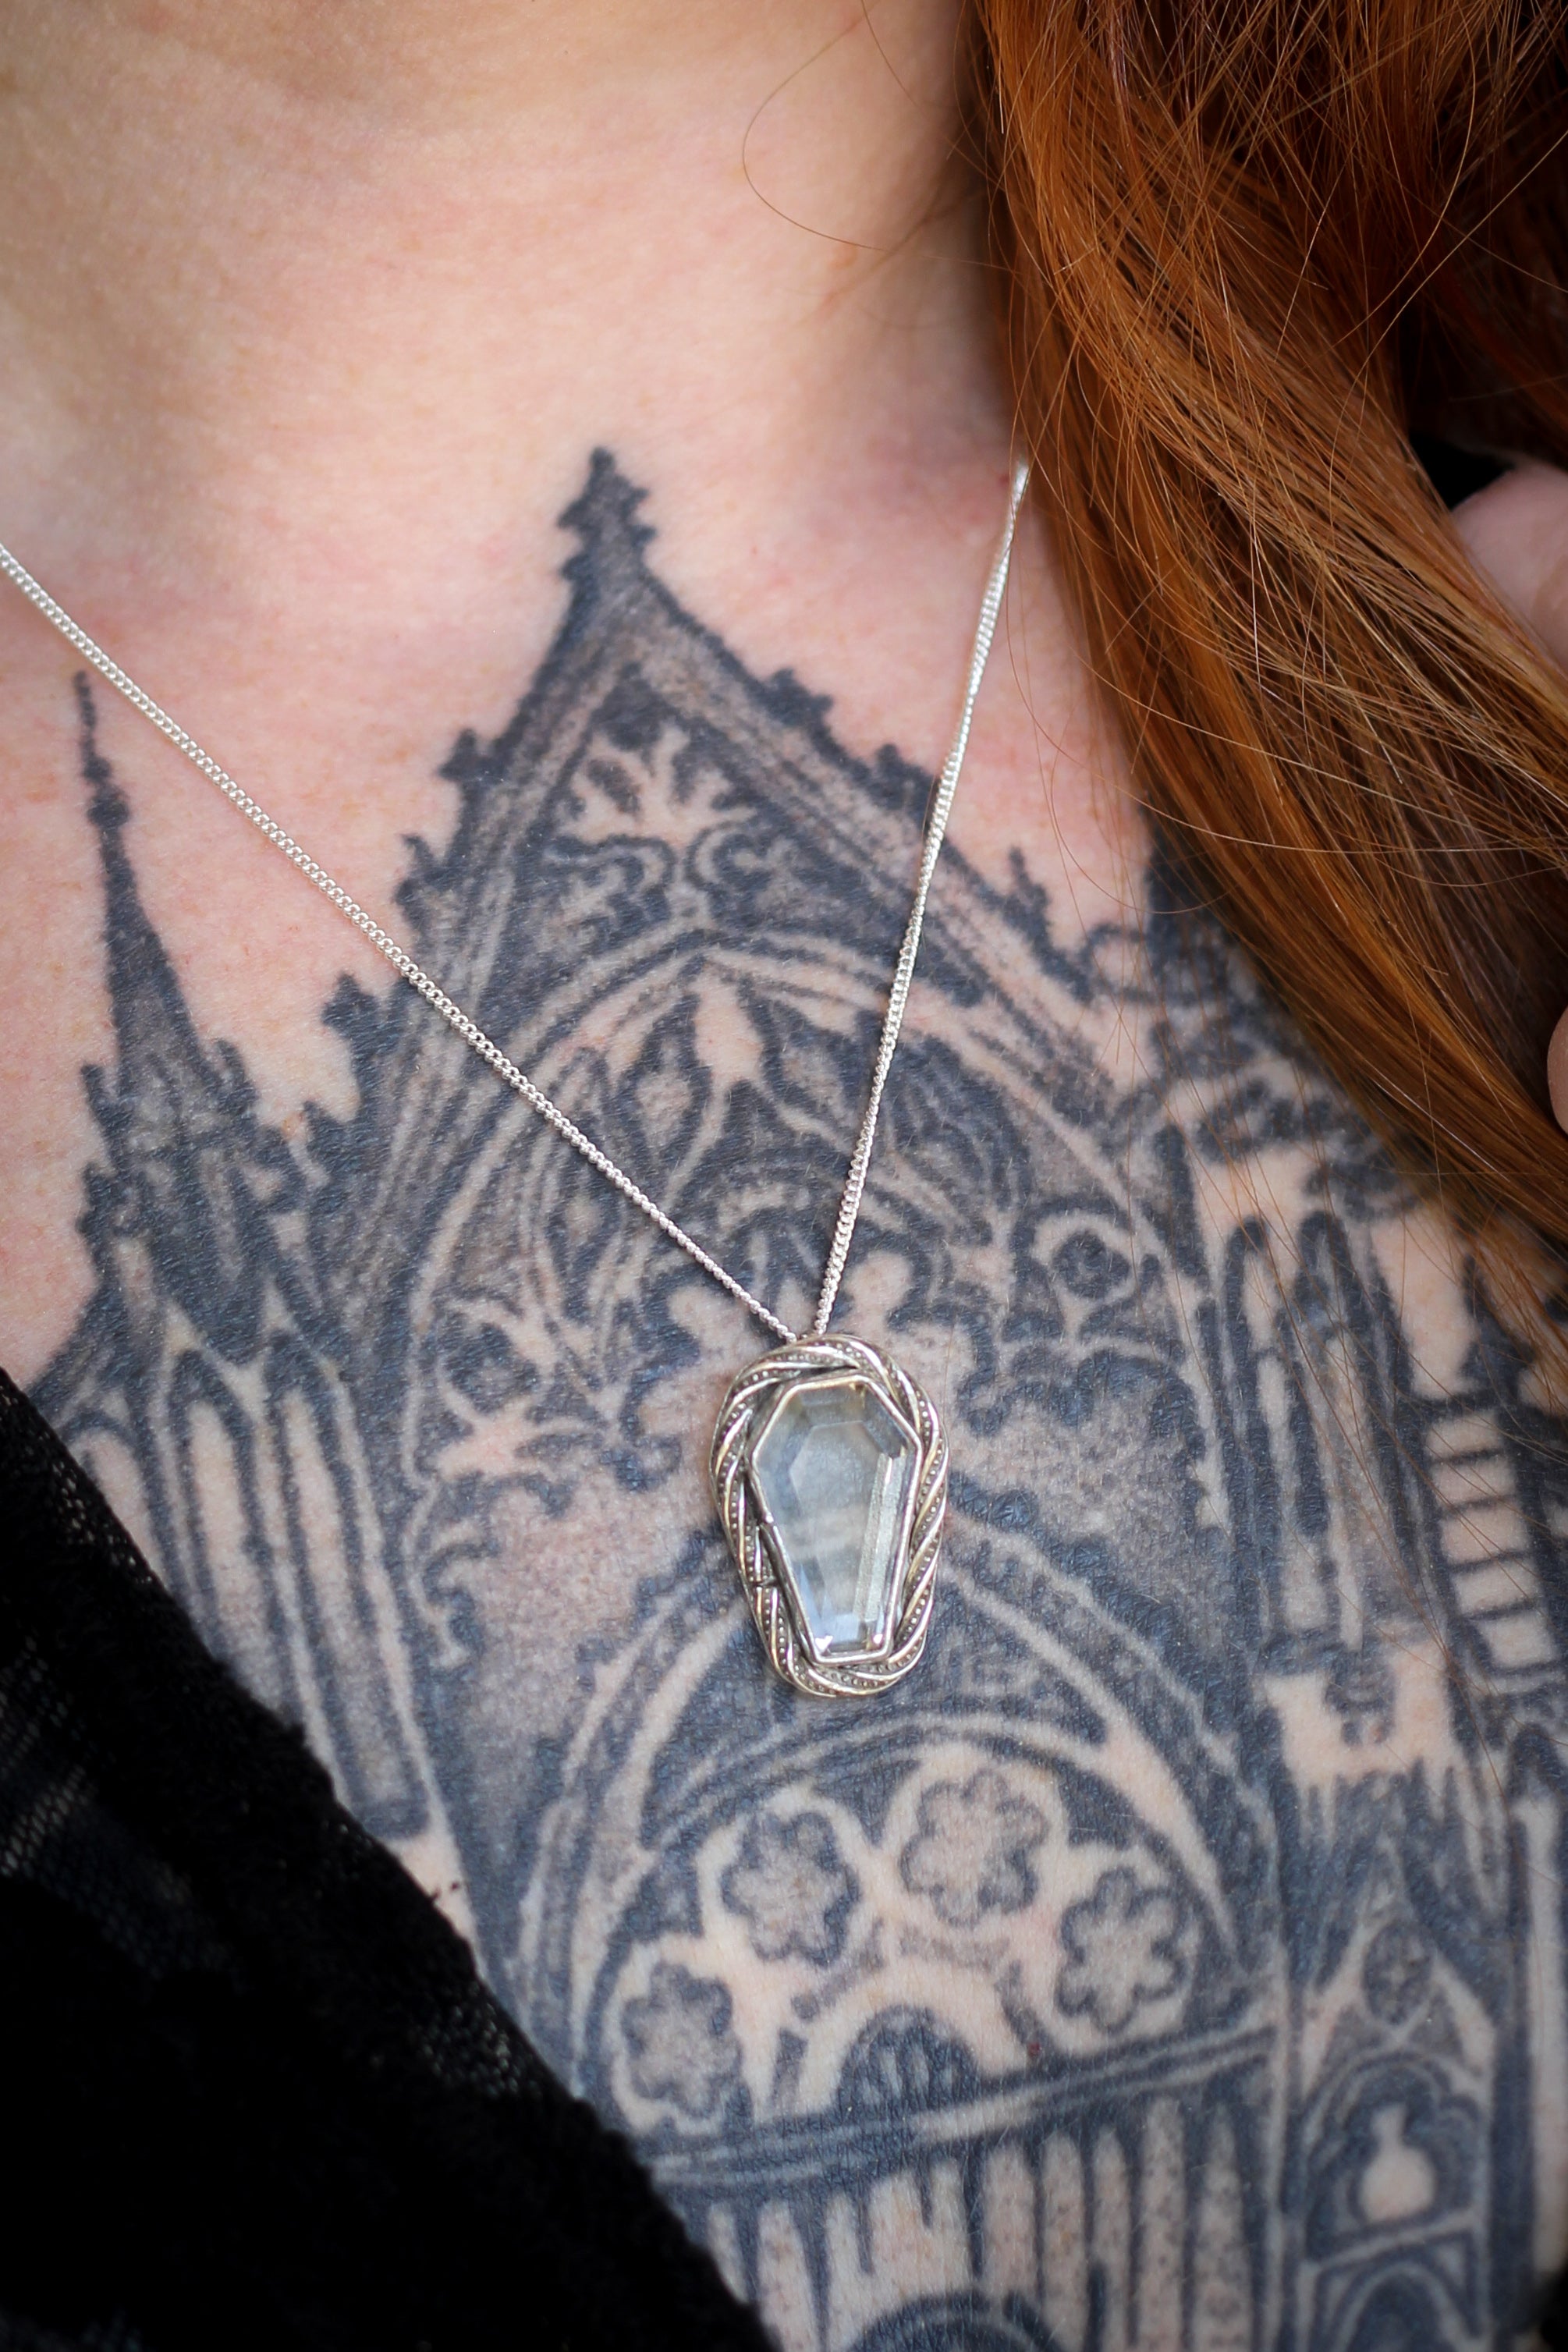 L'Eau du Styx - Collana con bara in quarzo trasparente e argento